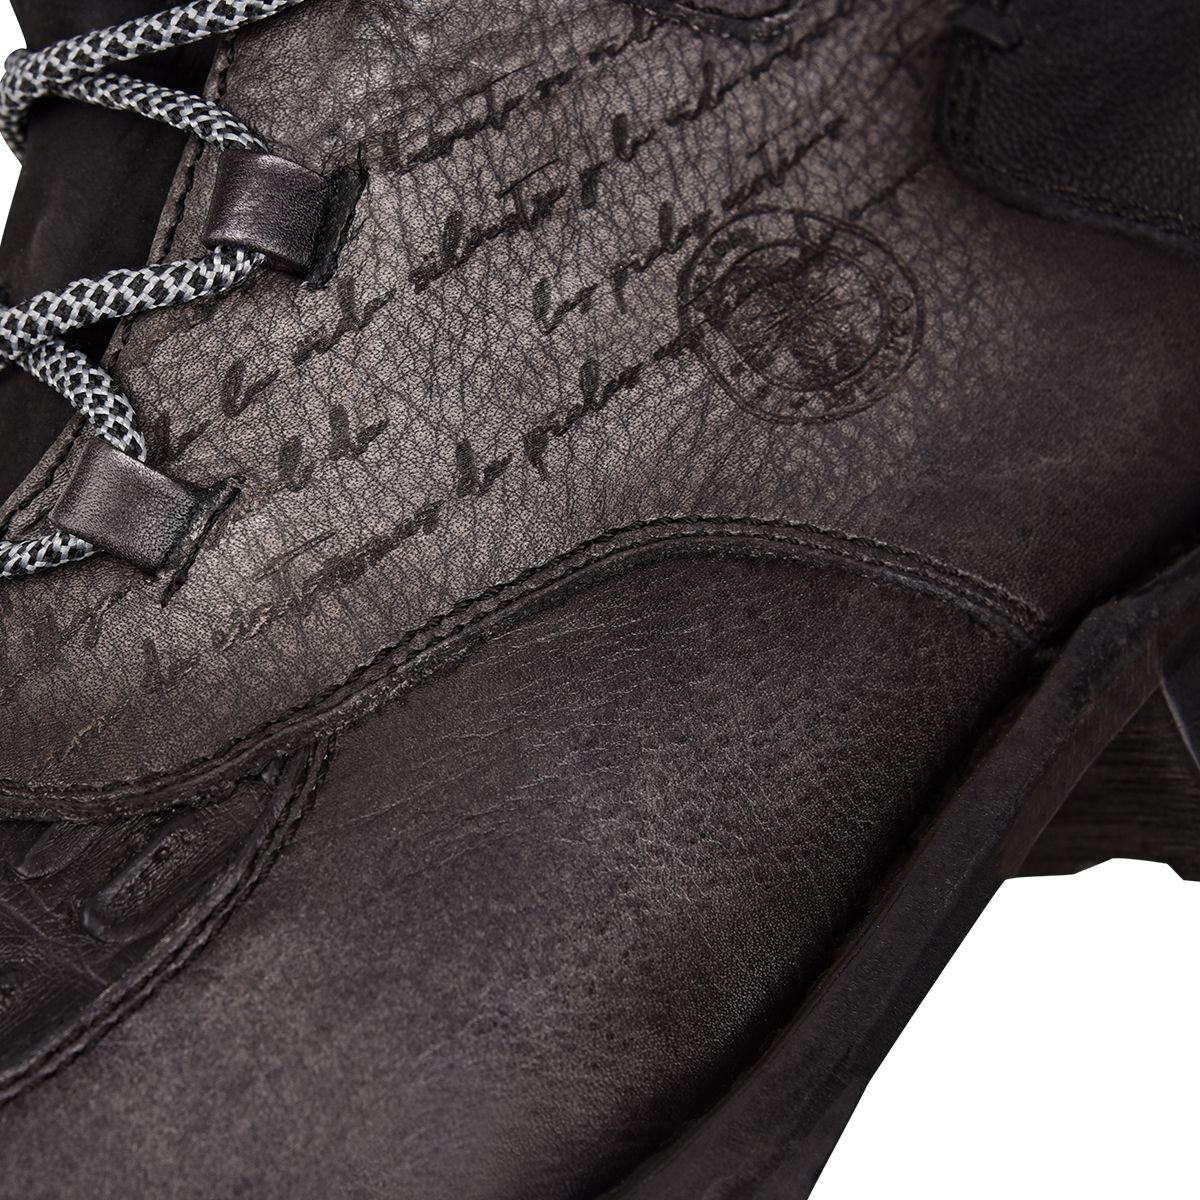 4D09FY - Cuadra black casual vintage fashion fuscus ankle booties for men.-Kuet.us